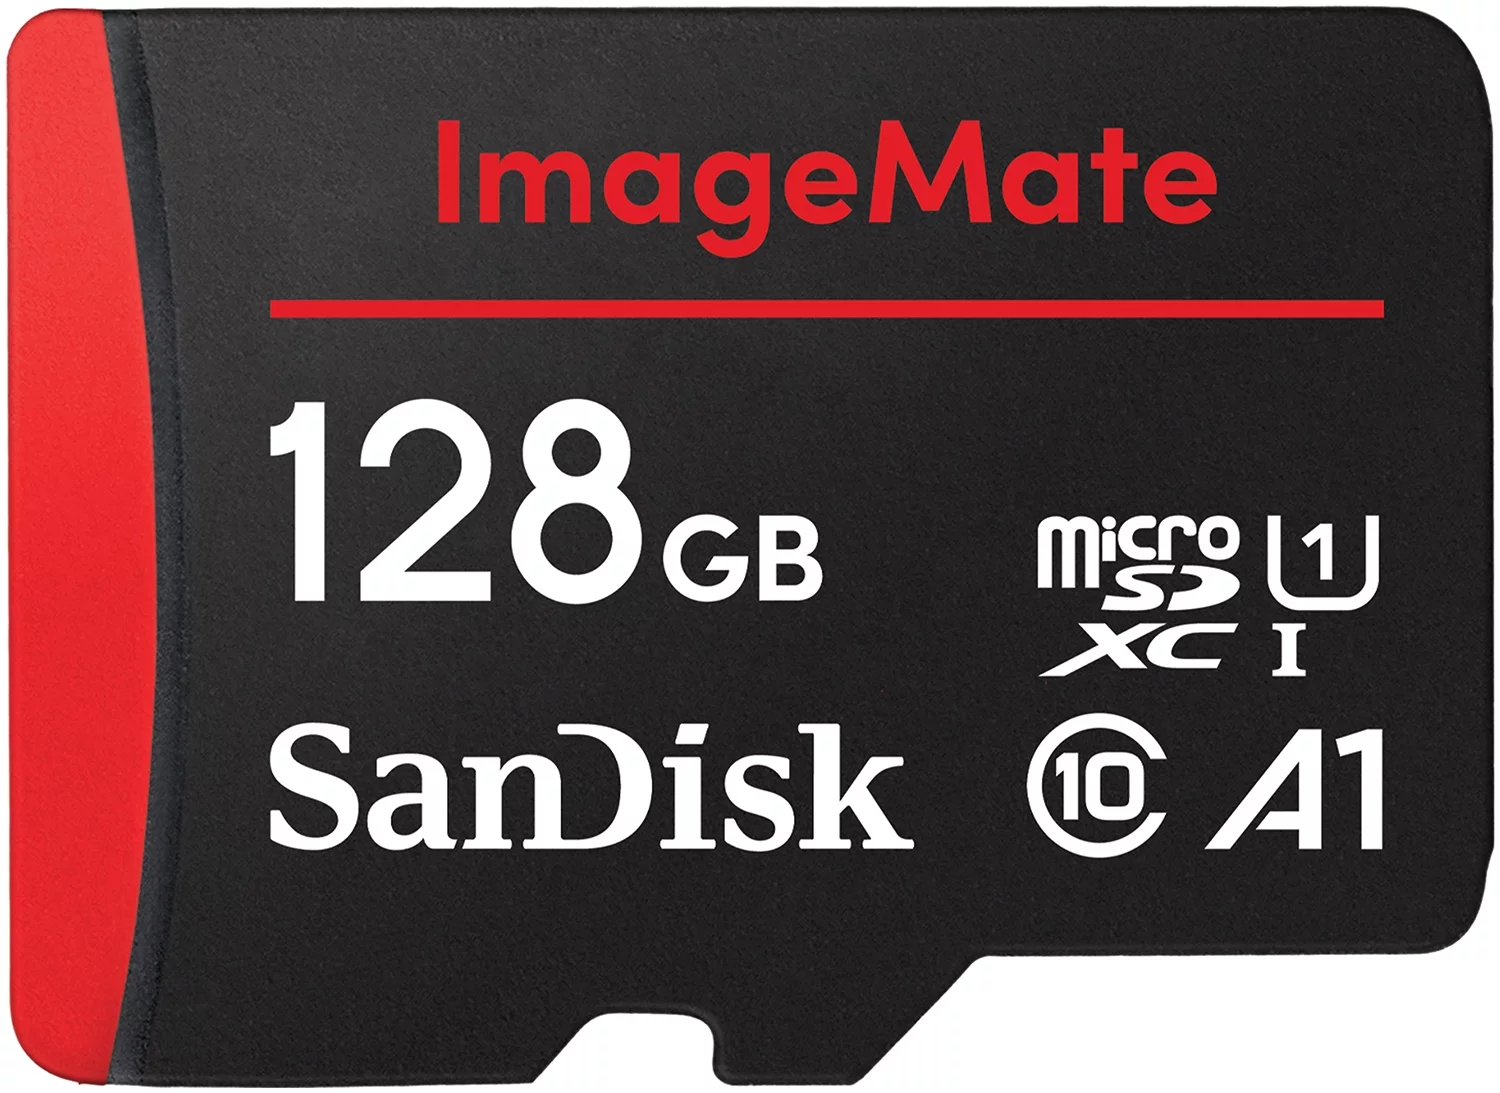 SanDisk 128GB ImageMate microSDXC UHS-1 Memory Card with Adapter - 120MB/s, C10, U1, Full HD, A1 Micro SD Card - SDSQUA4-128G-AW6KA